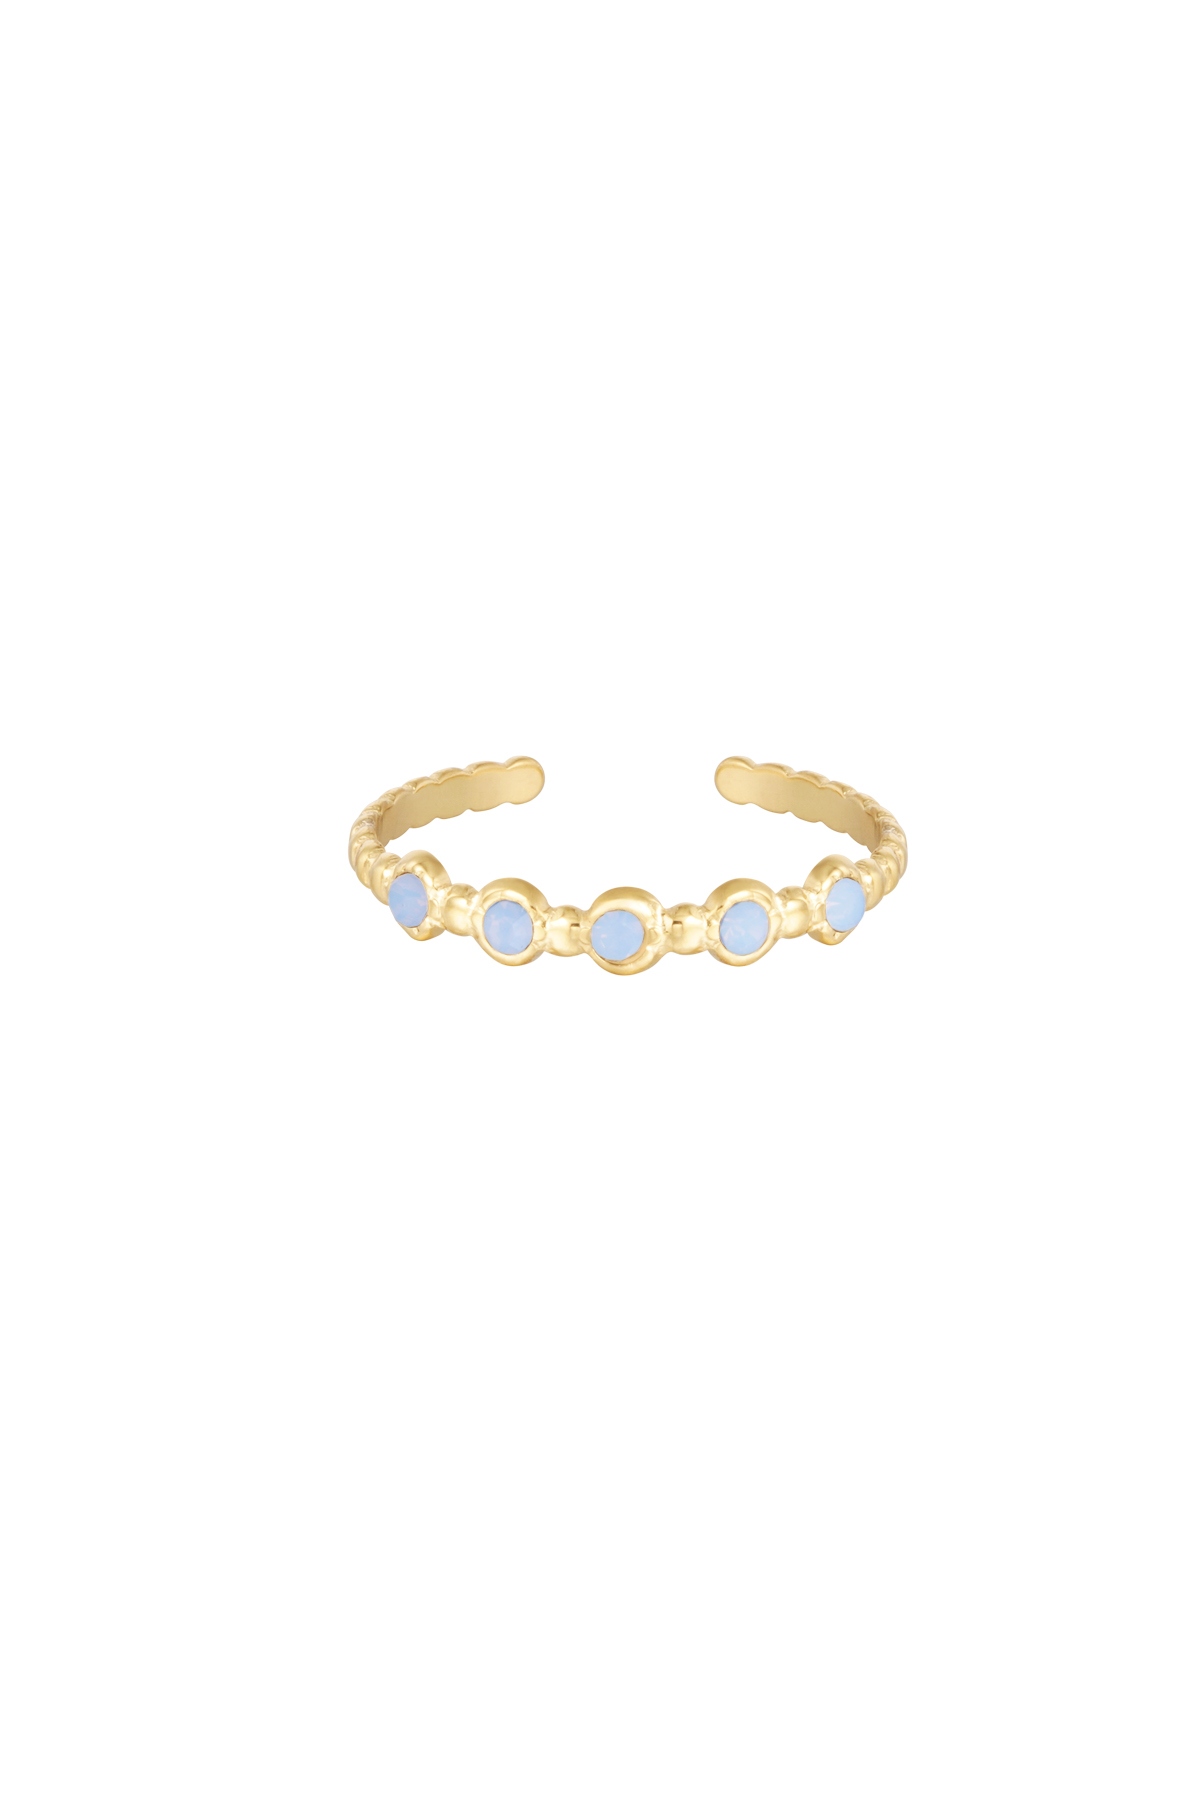 Ring steentjes - goud/blauw h5 